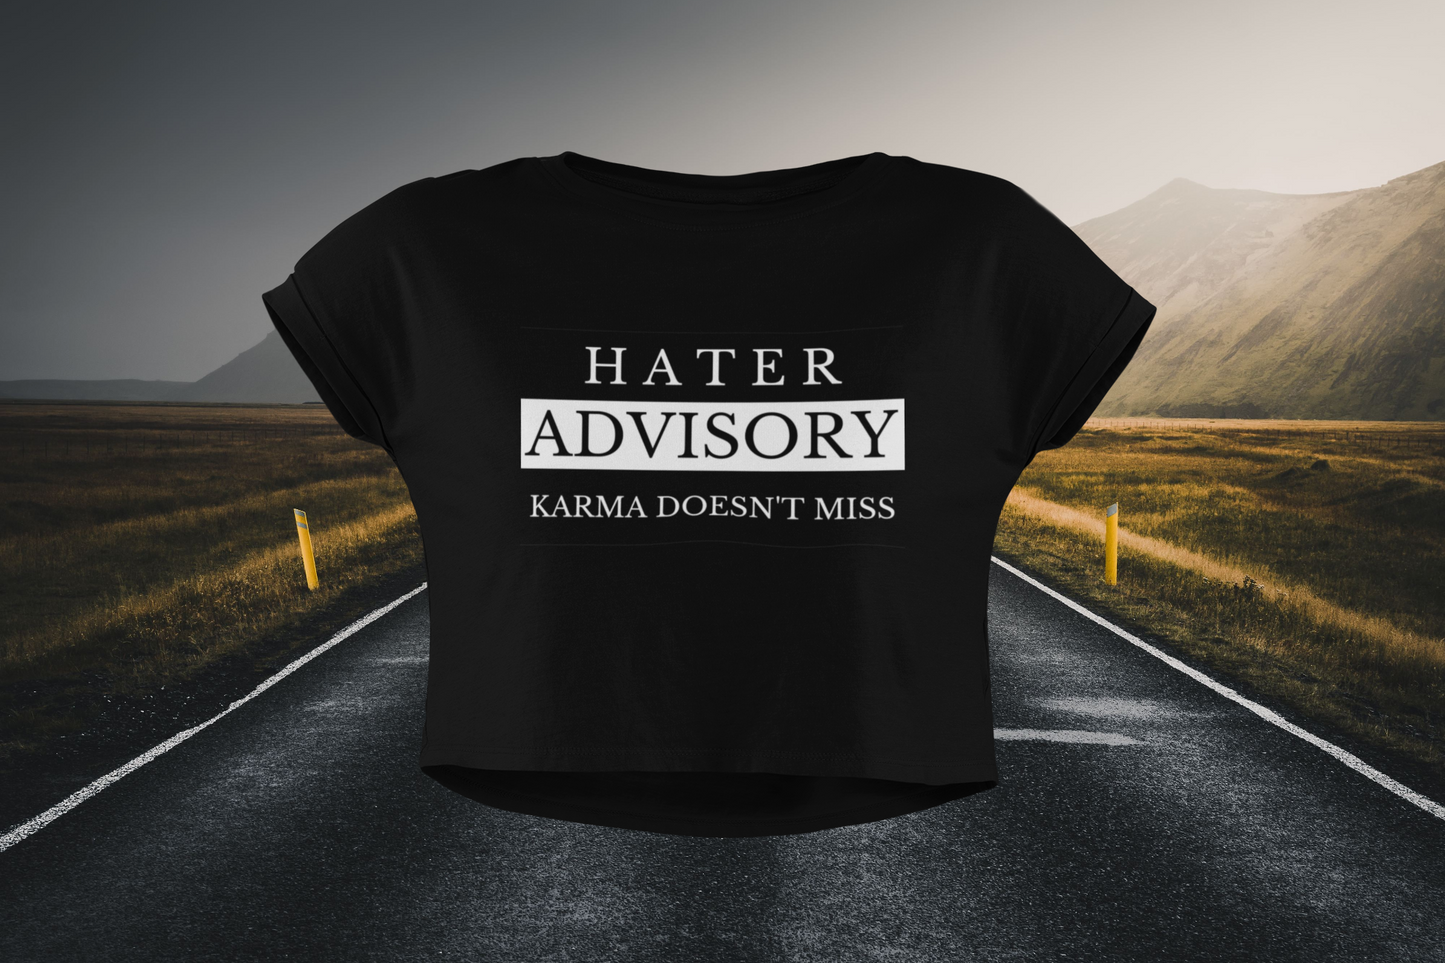 Hater Advisory Christian Crop Top